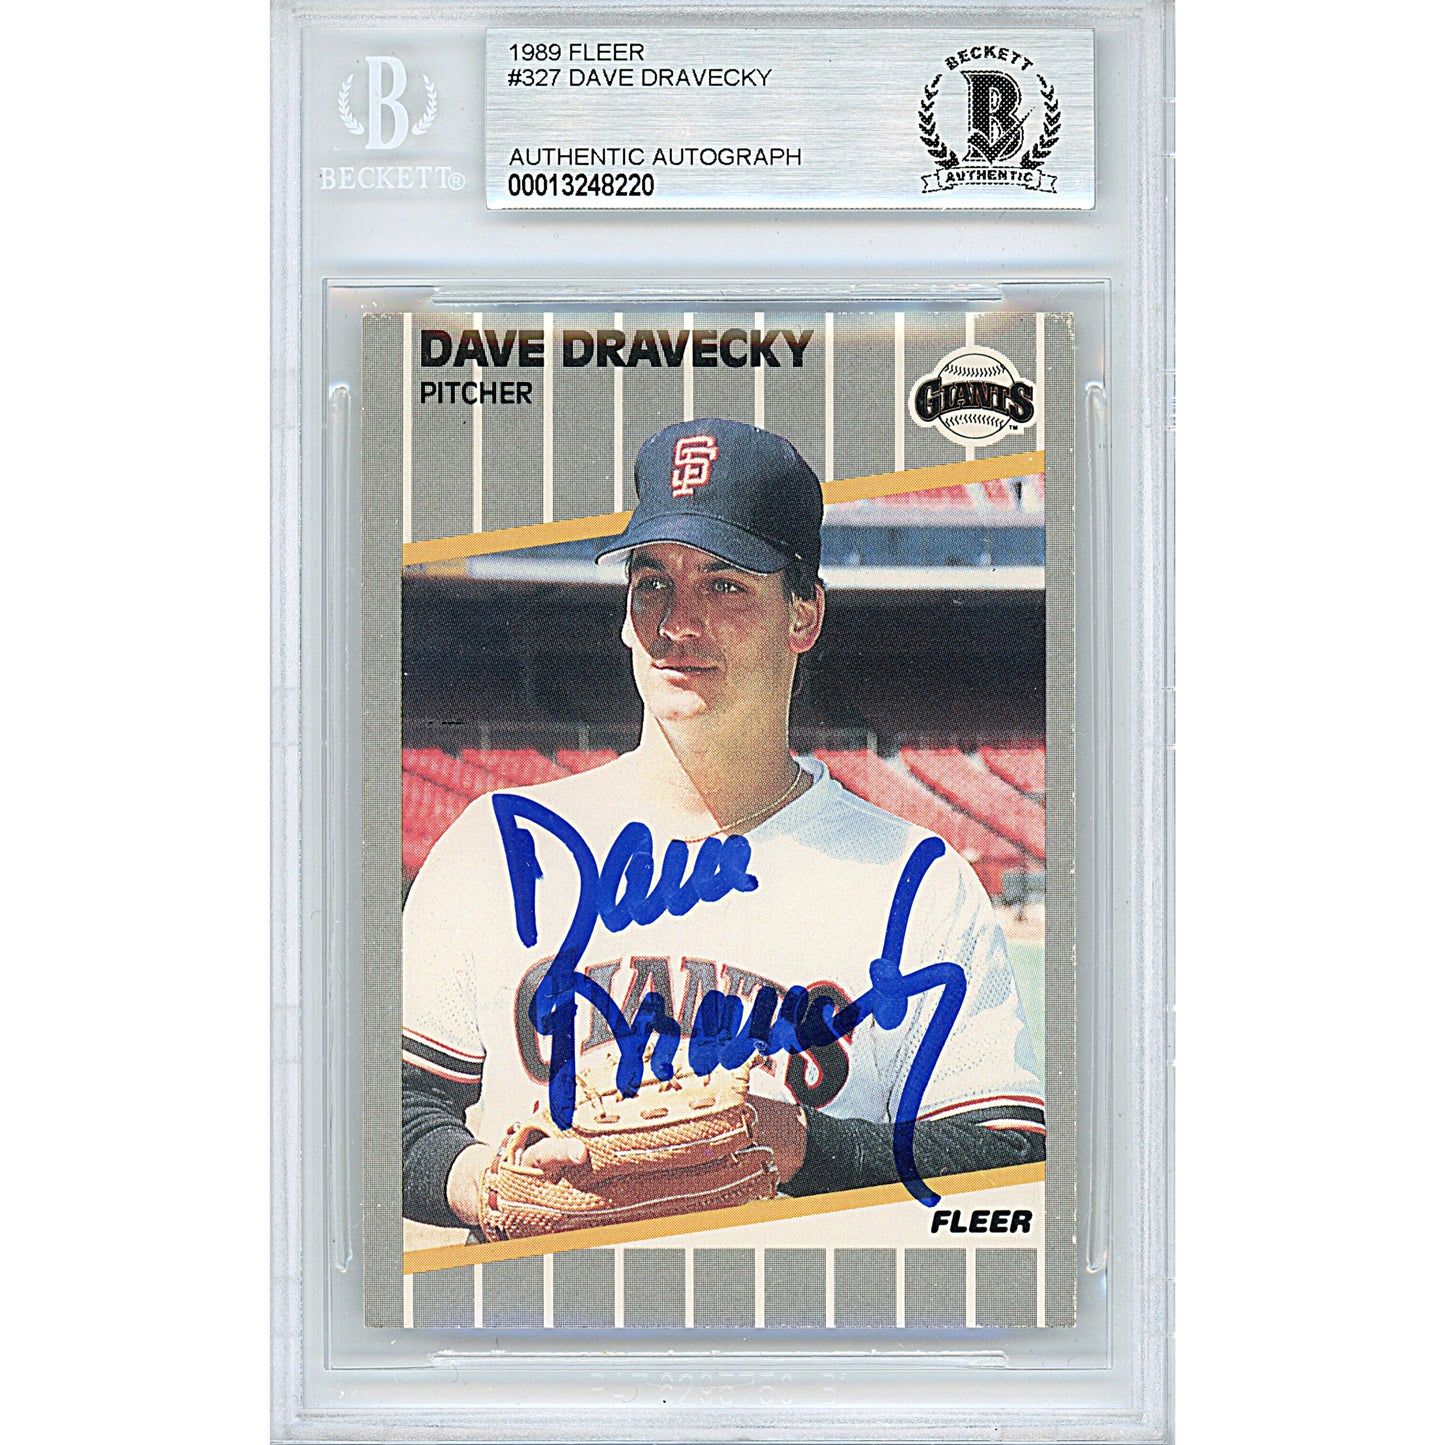 Baseballs- Autographed- Dave Dravecky Signed San Francisco Giants 1989 Fleer Baseball Card Beckett BAS Slabbed 00014226224 - 101